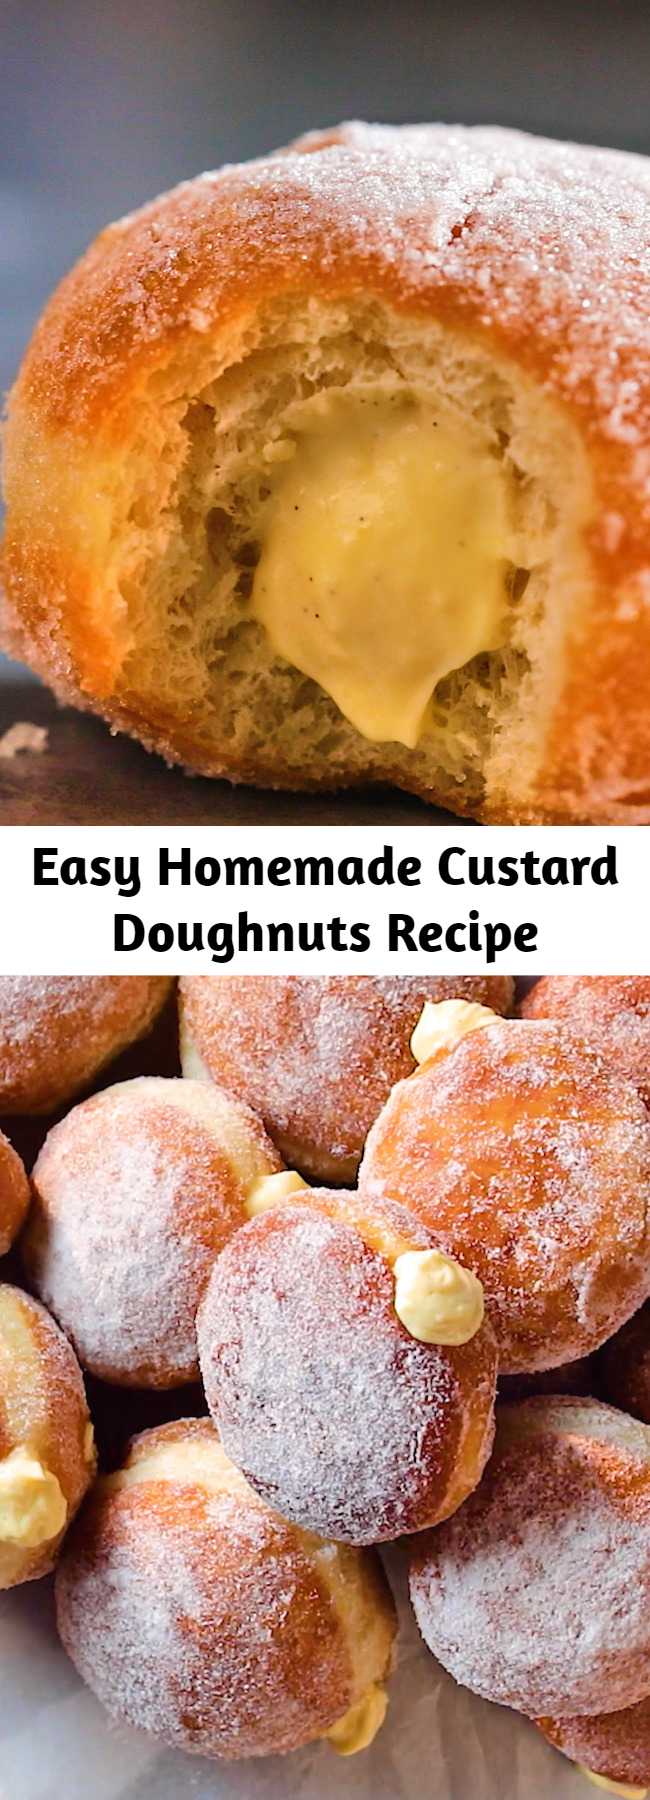 Easy Homemade Custard Doughnuts Recipe